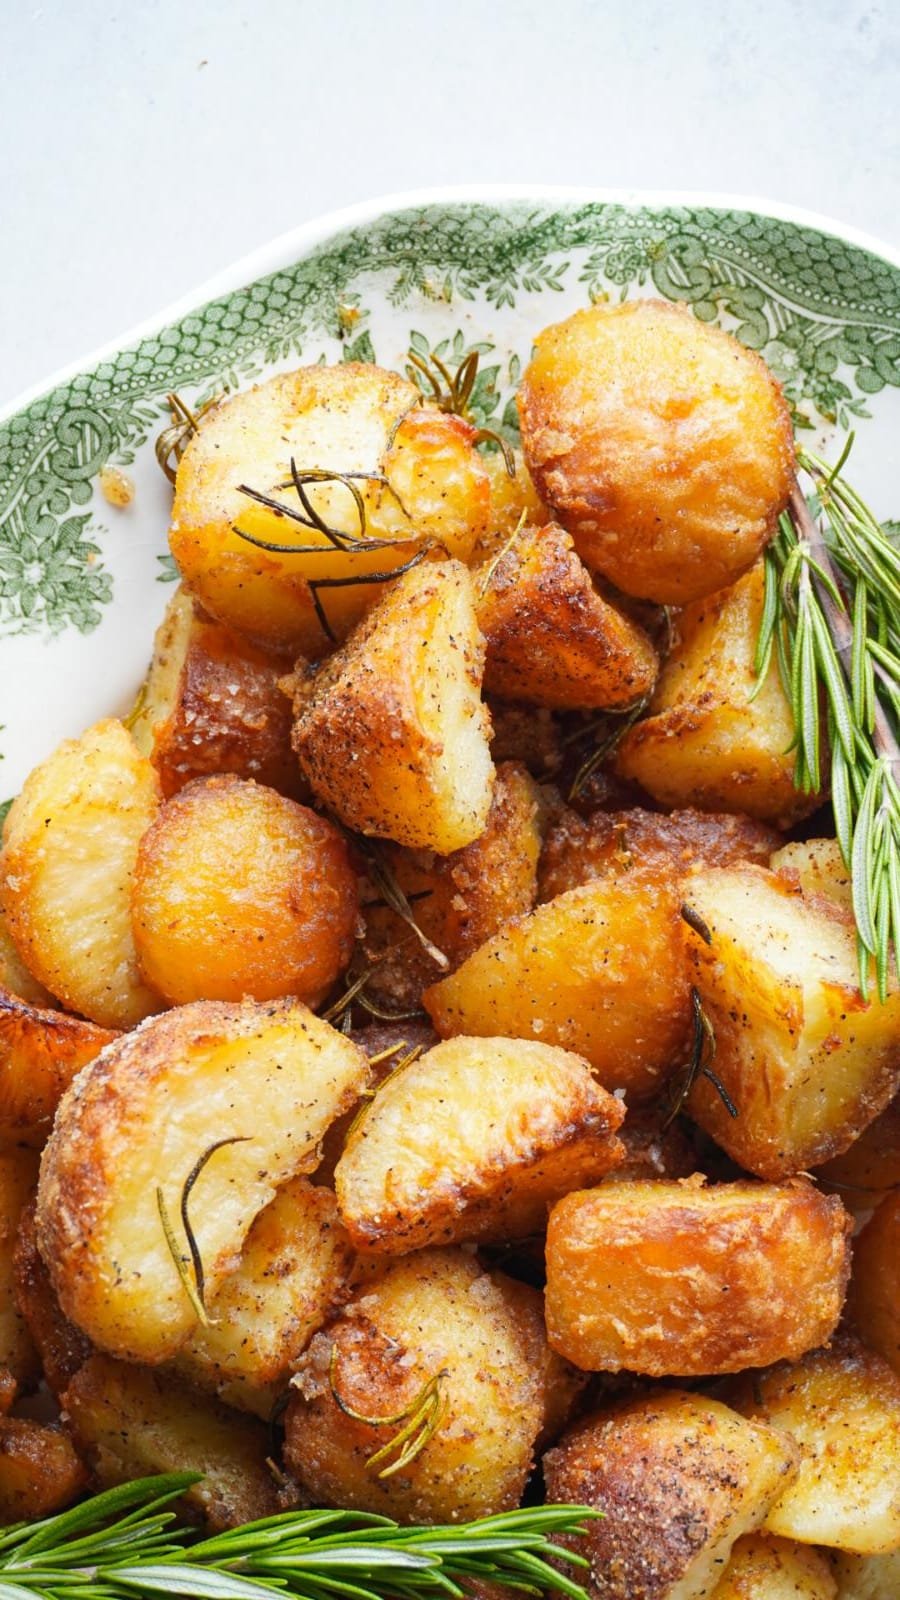 Seasoned baked potatoes that are crispy